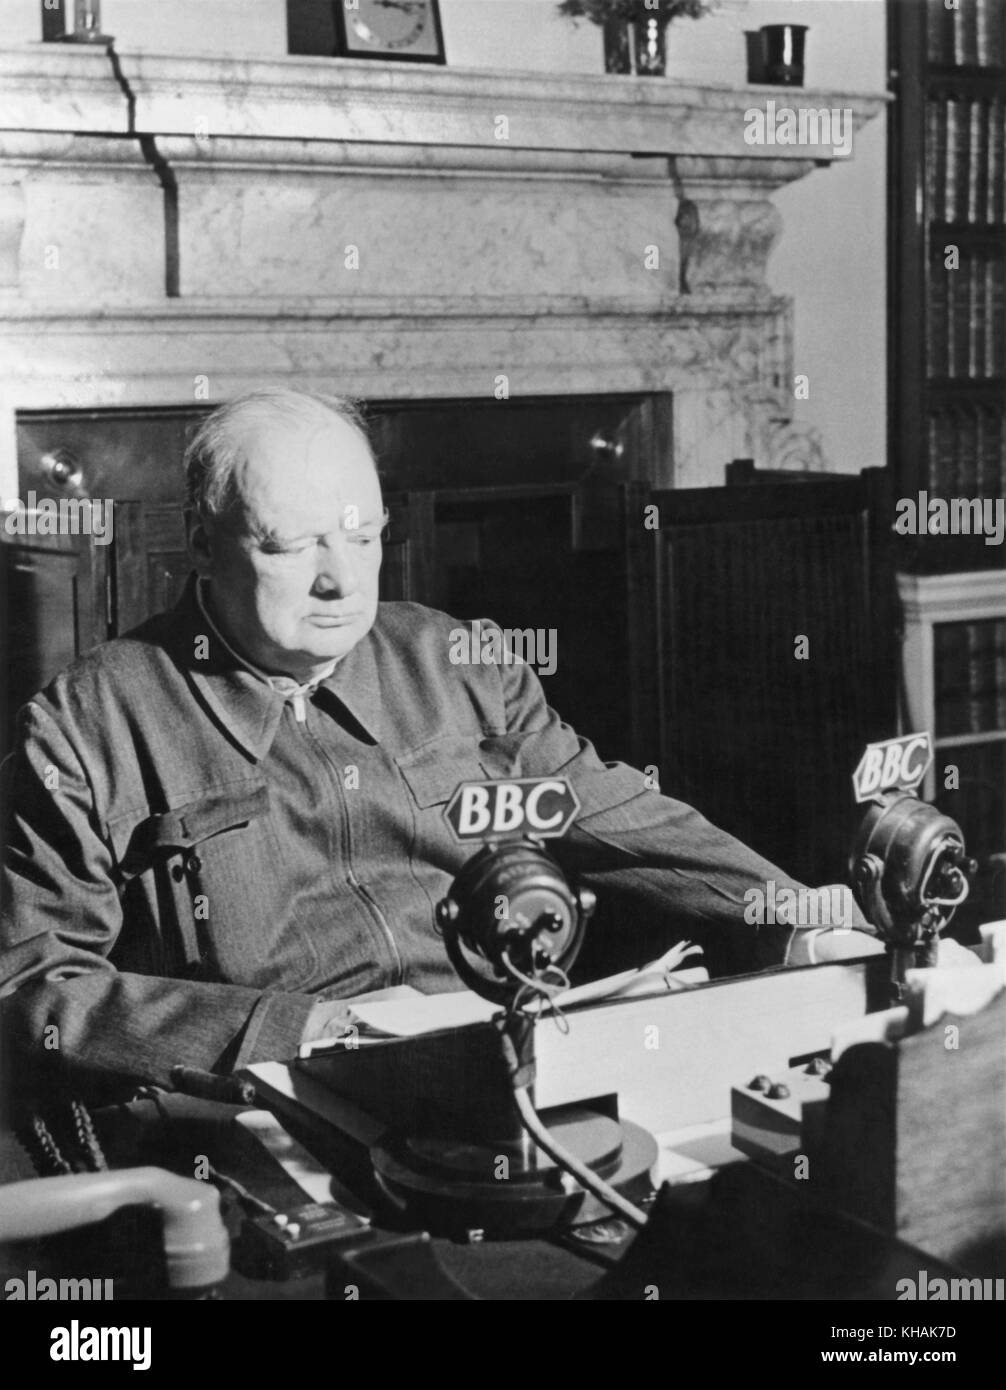 Winston Churchill, premier ministre de la Grande-Bretagne, diffusant de la BBC en Europe en juin 1942. Banque D'Images